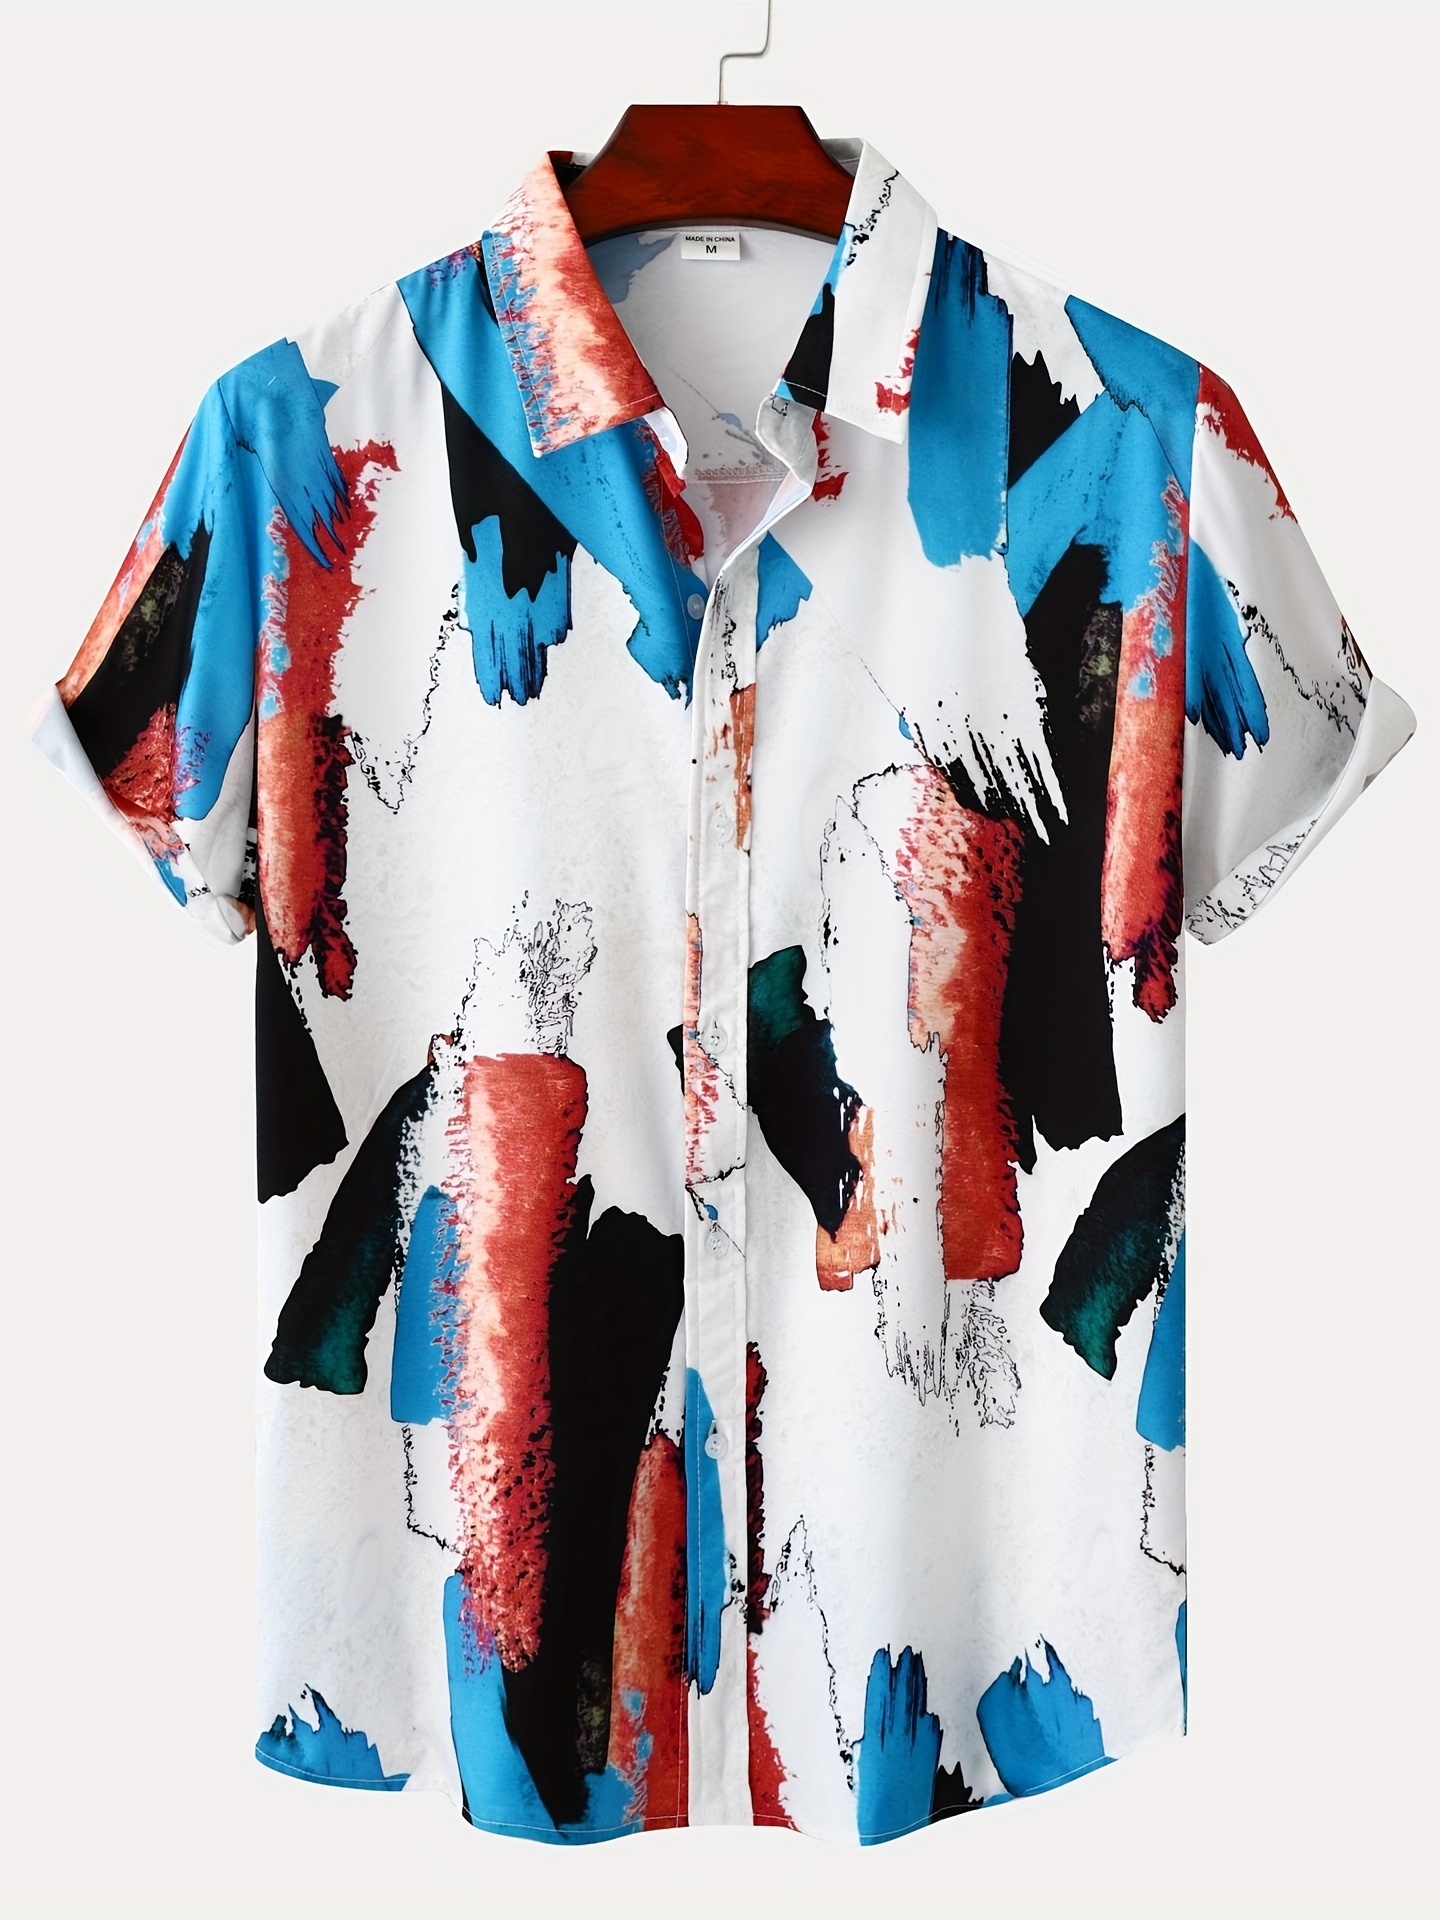 Men Short Sleeve Palm Tree Hawaii Shirts Summer Beach Casual Floral T Shirt  Tops